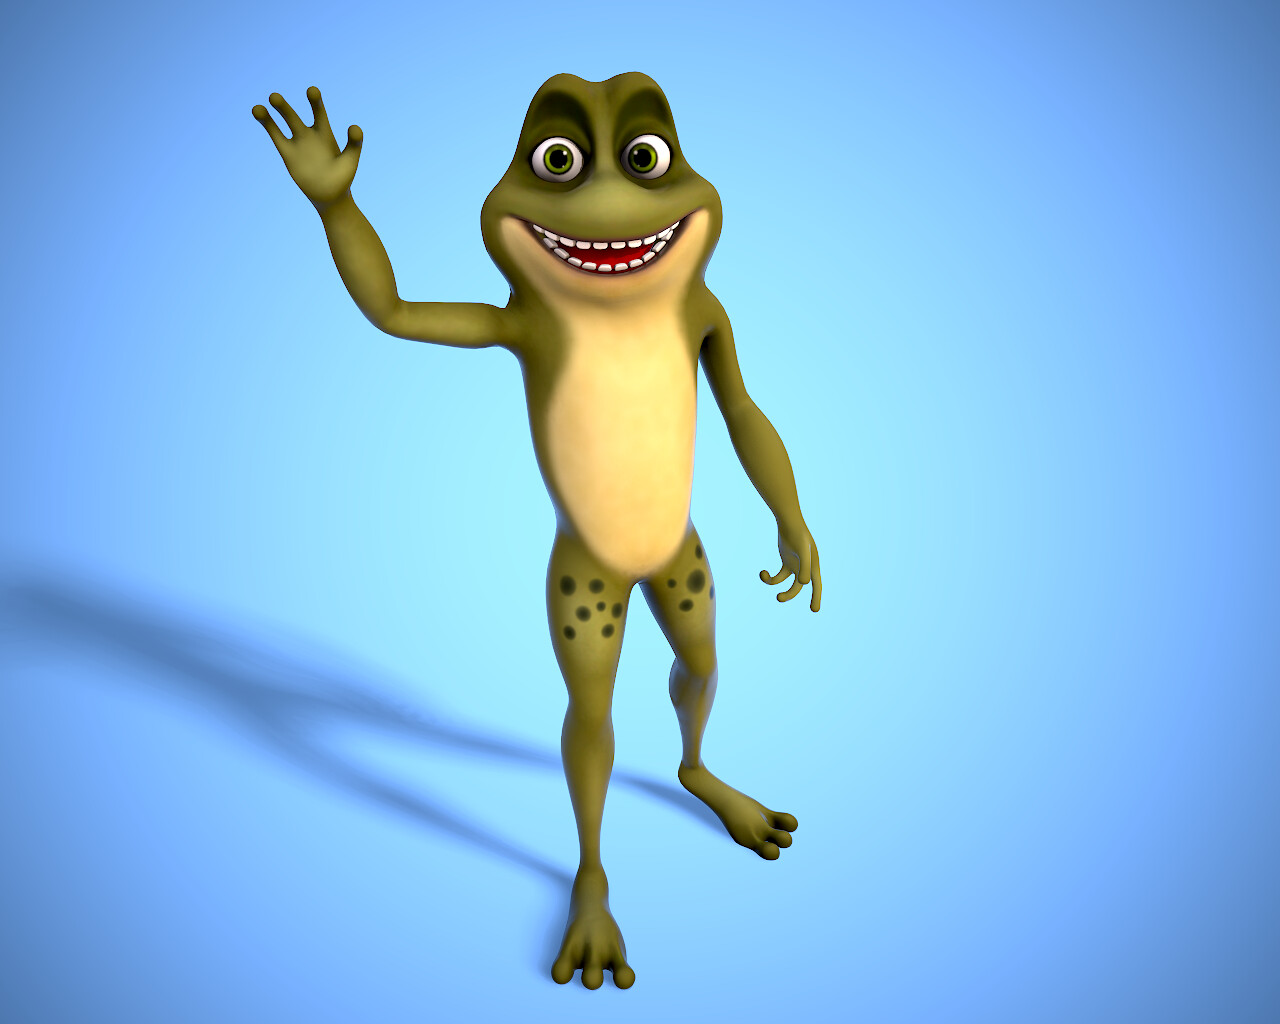 ArtStation - cartoon froggy